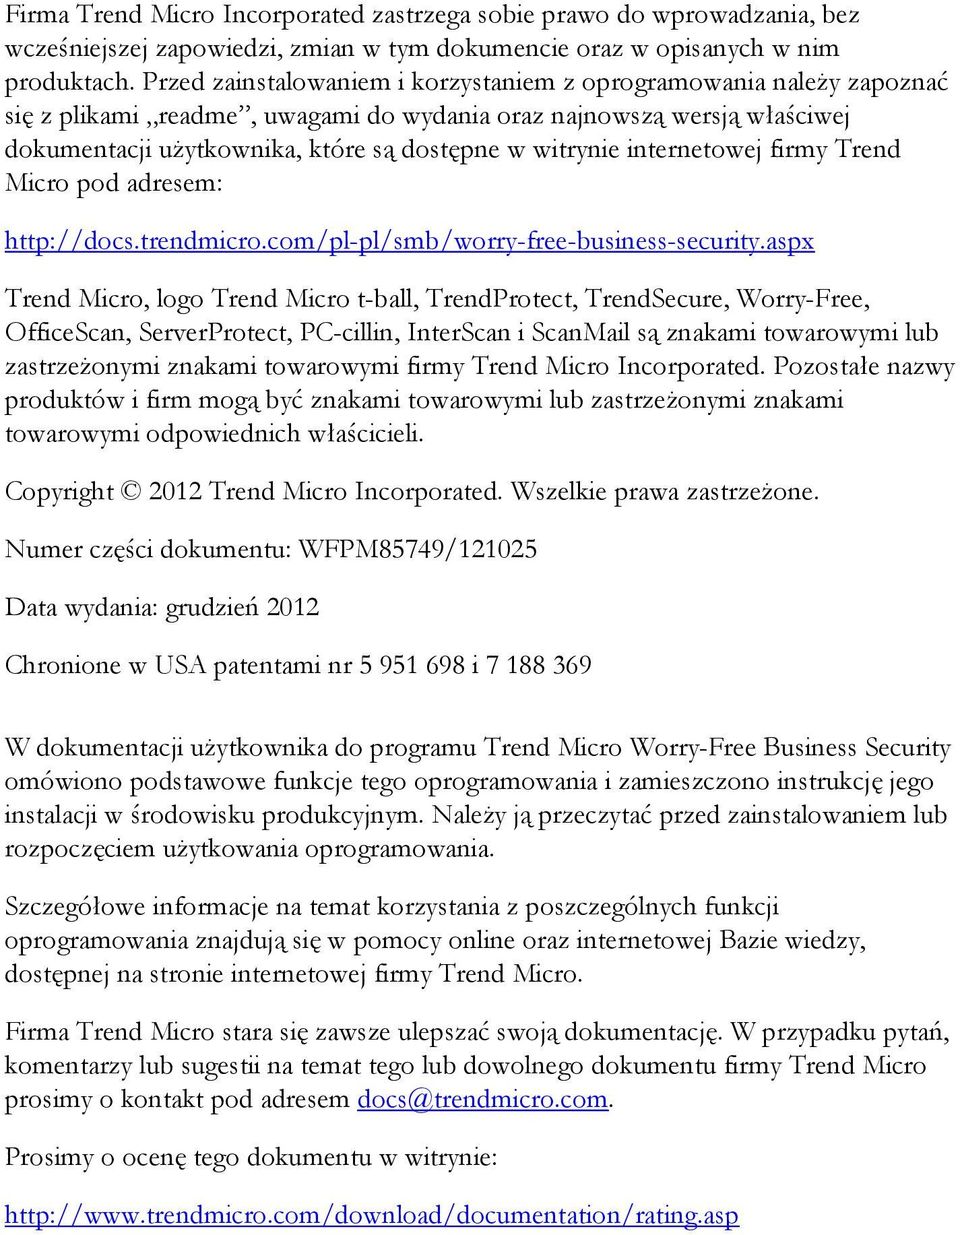 internetowej firmy Trend Micro pod adresem: http://docs.trendmicro.com/pl-pl/smb/worry-free-business-security.